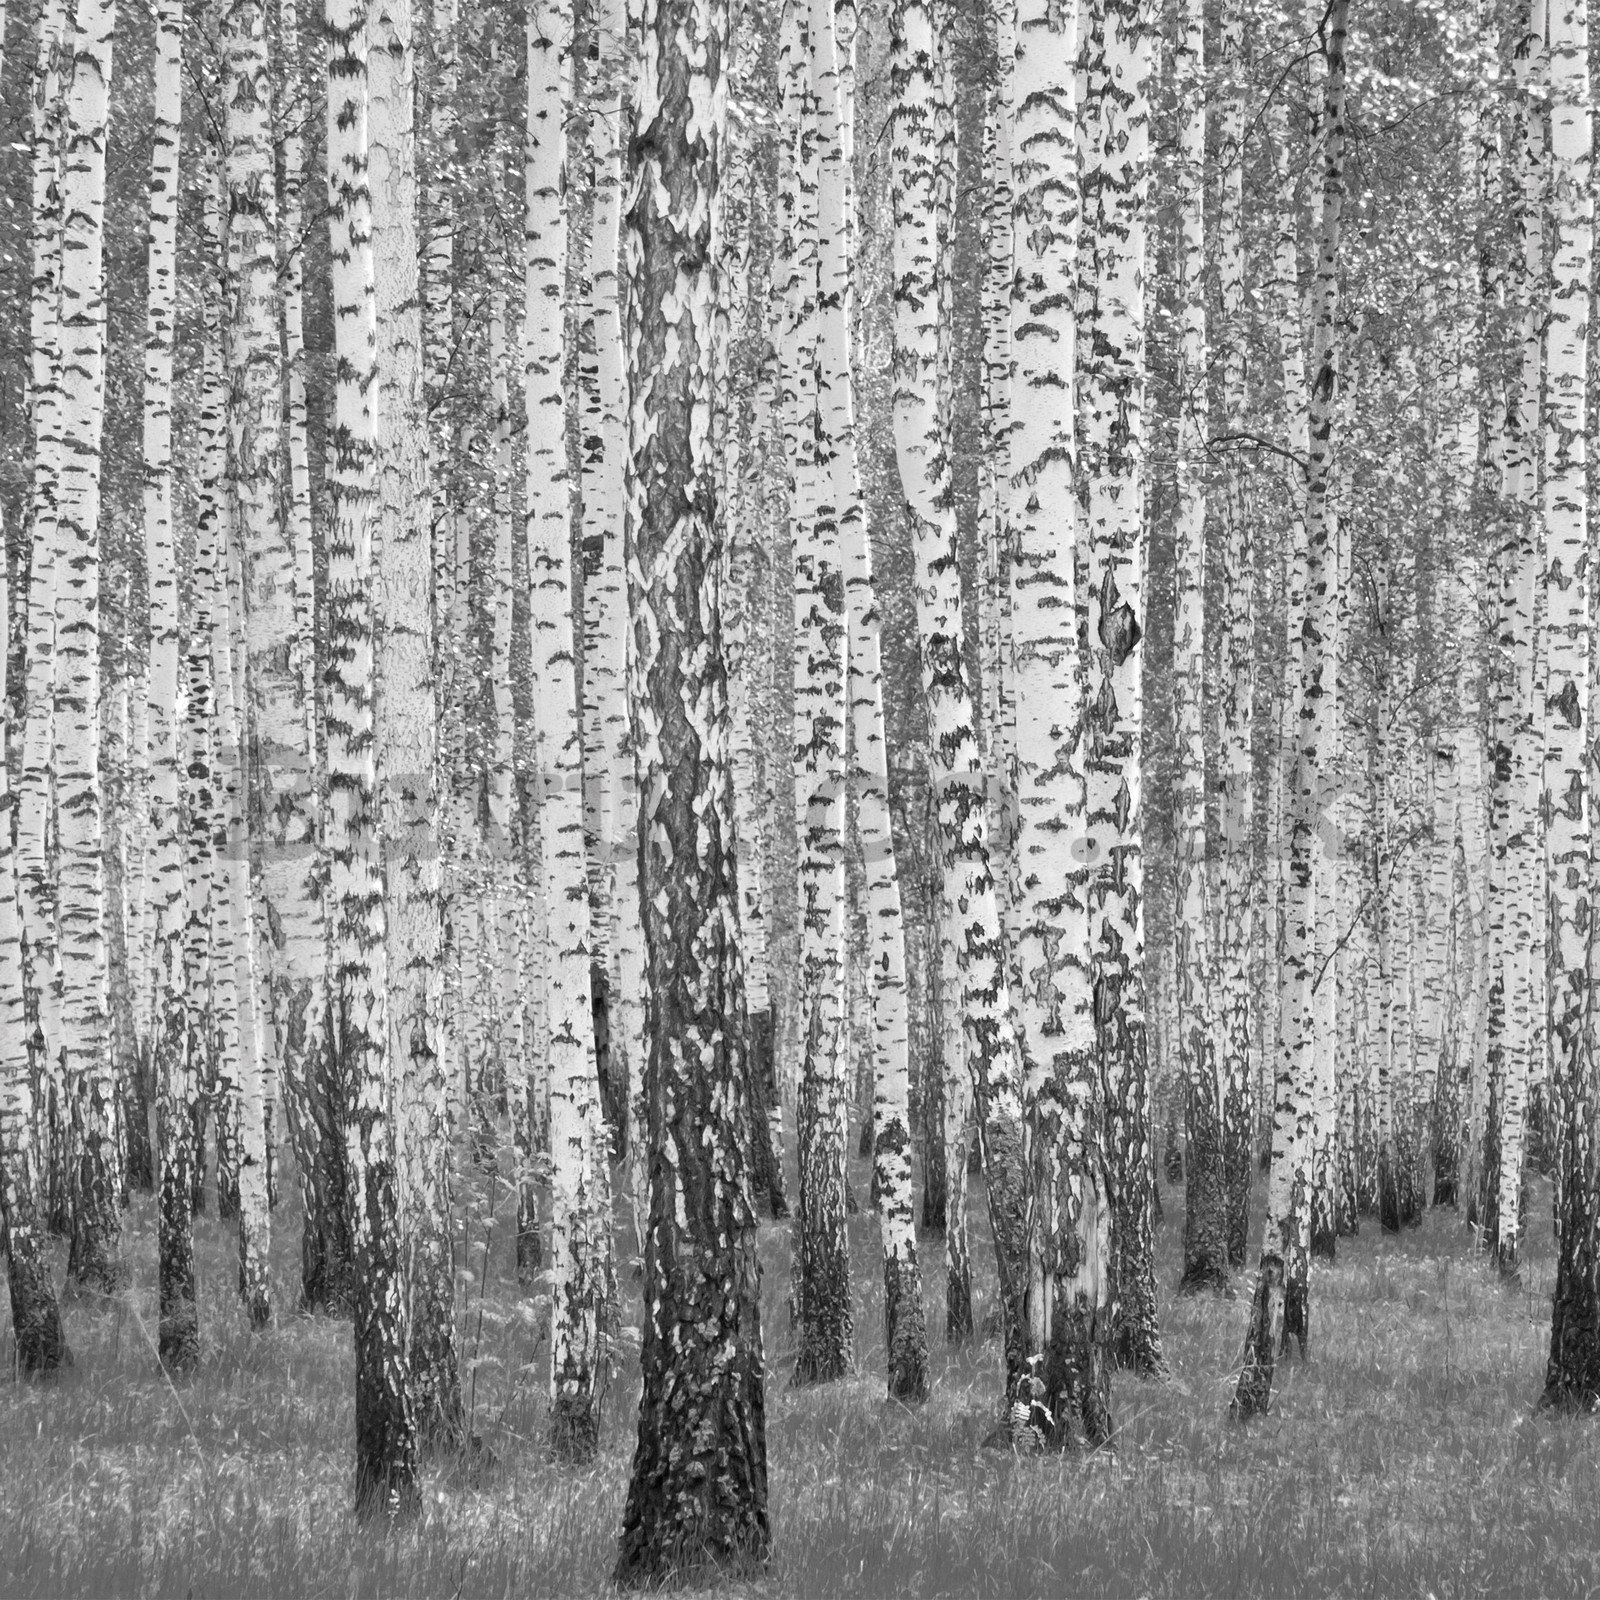 Wall mural vlies: Black and white birch trees - 416x254 cm